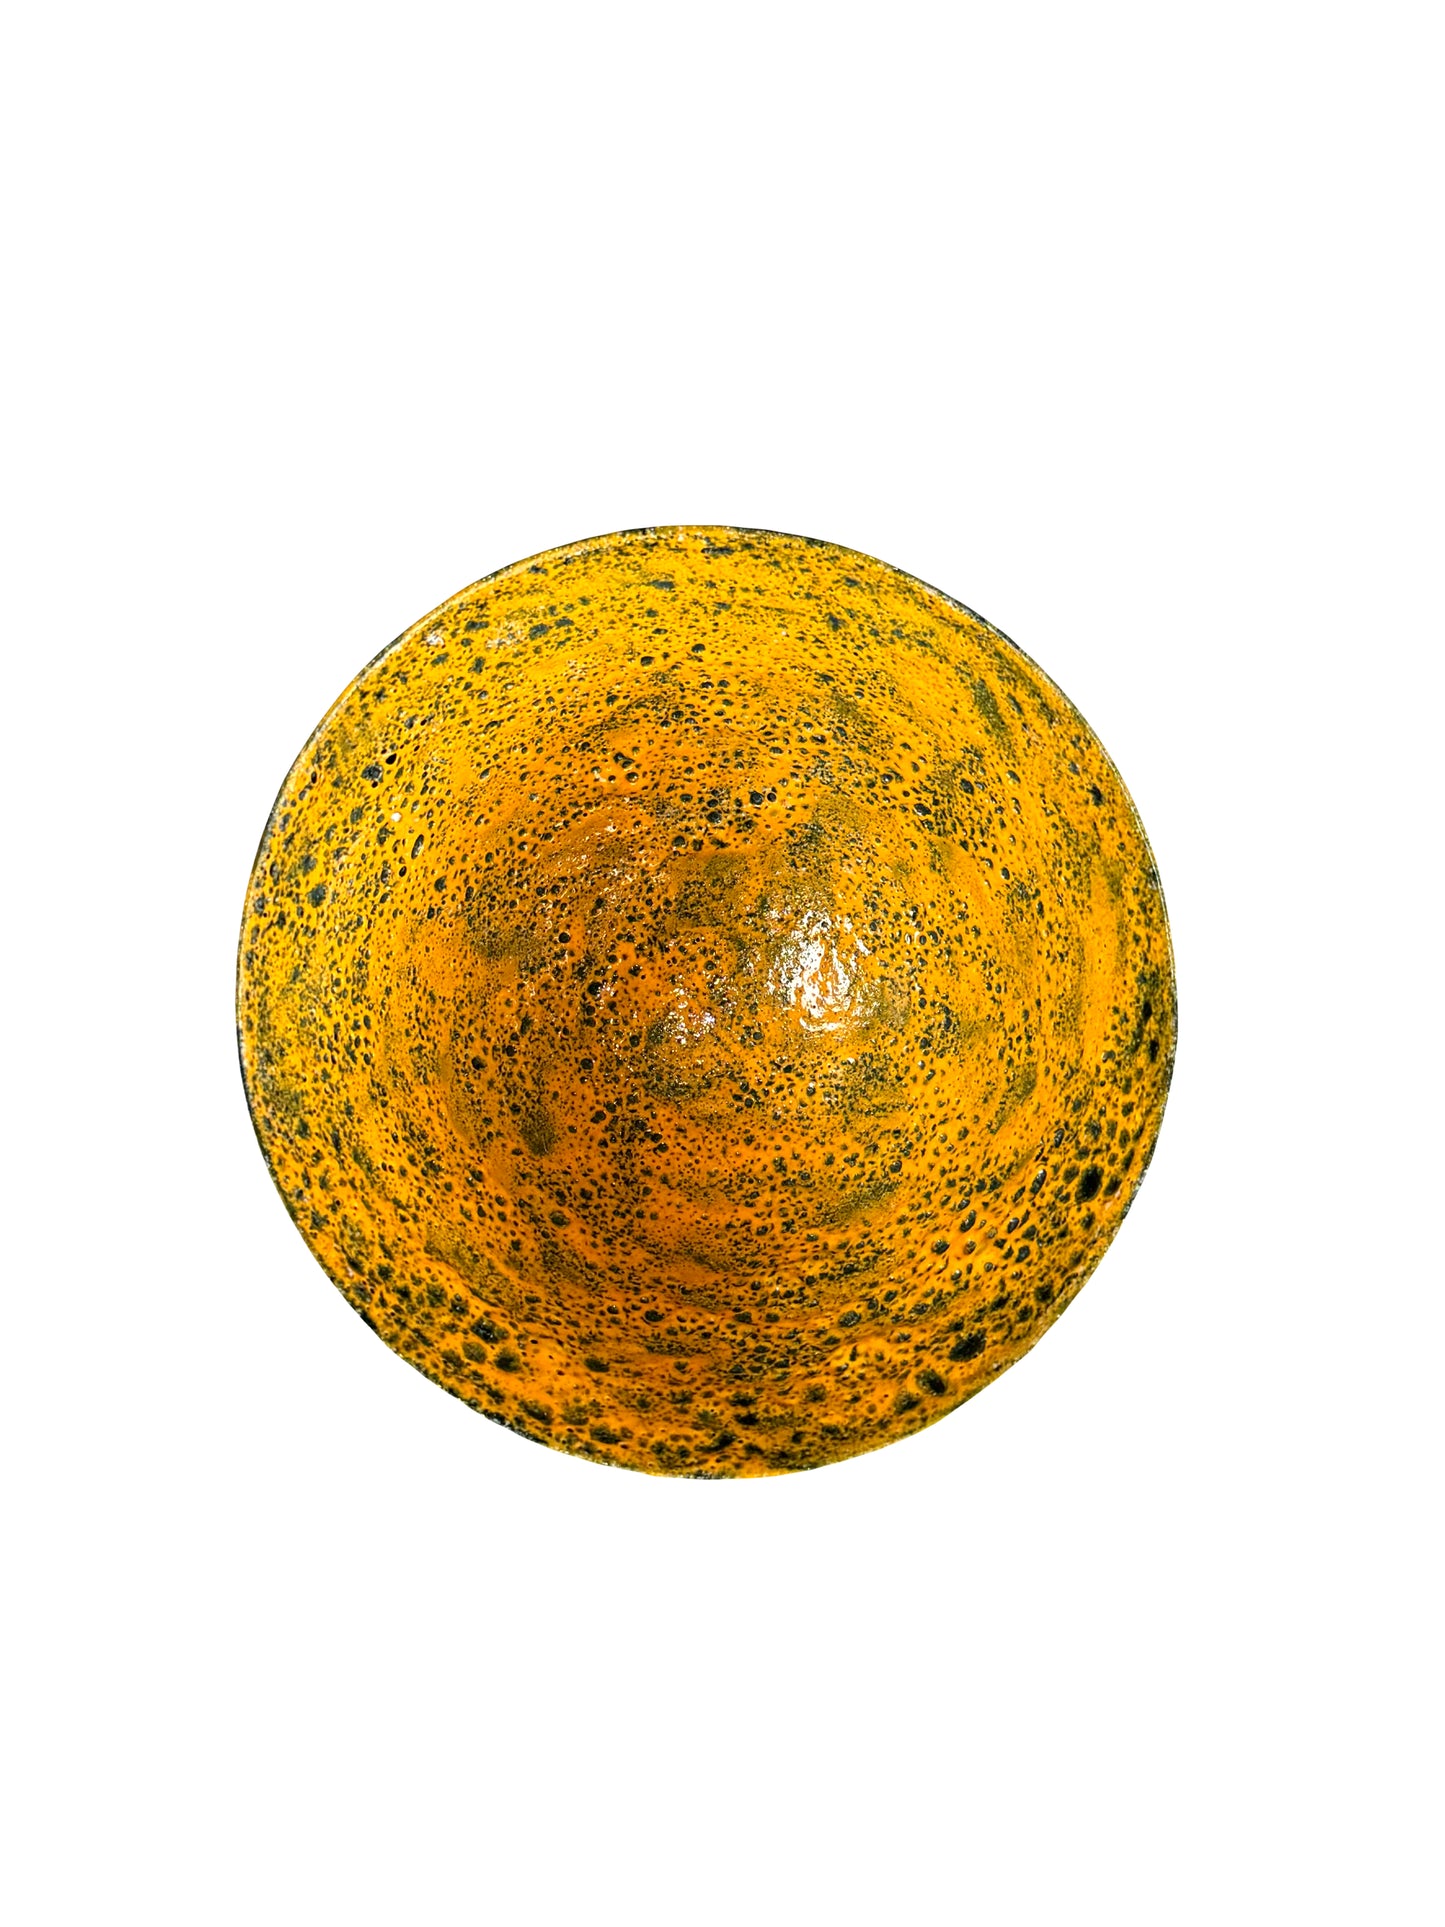 Orange Crater Glazed Bowl